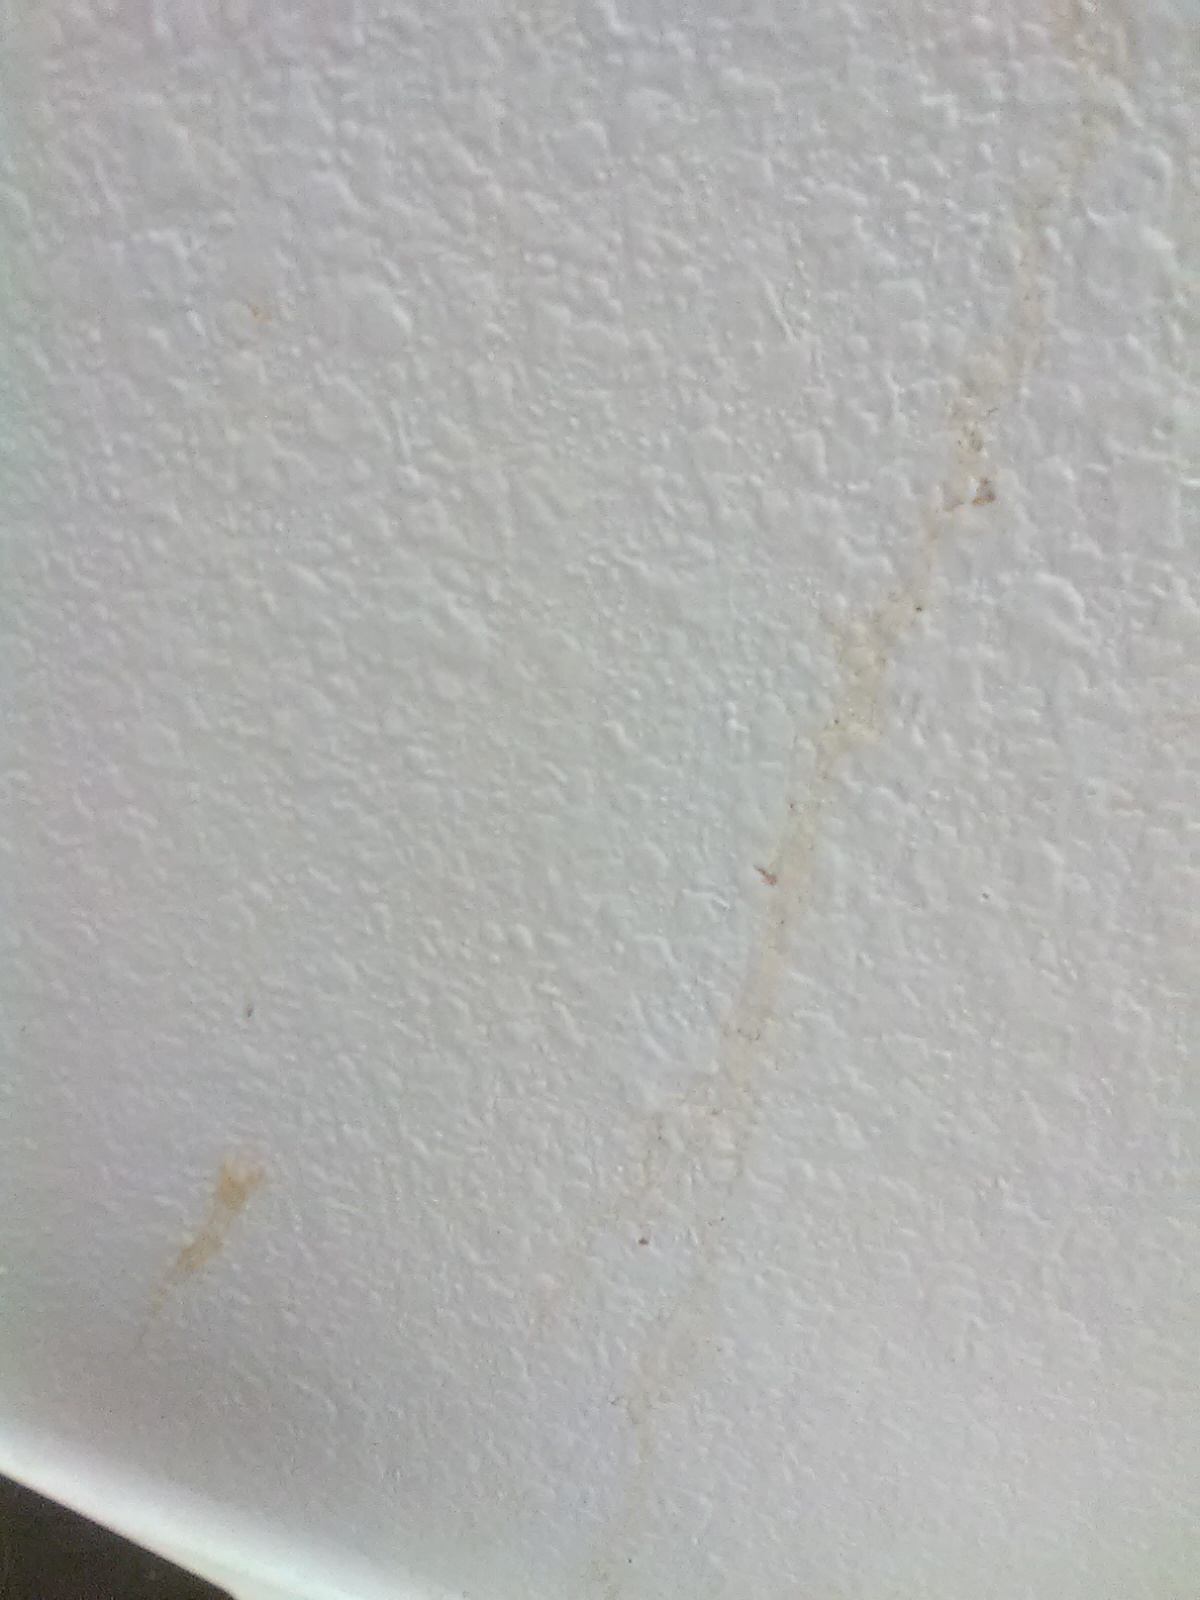 Slime On Wall